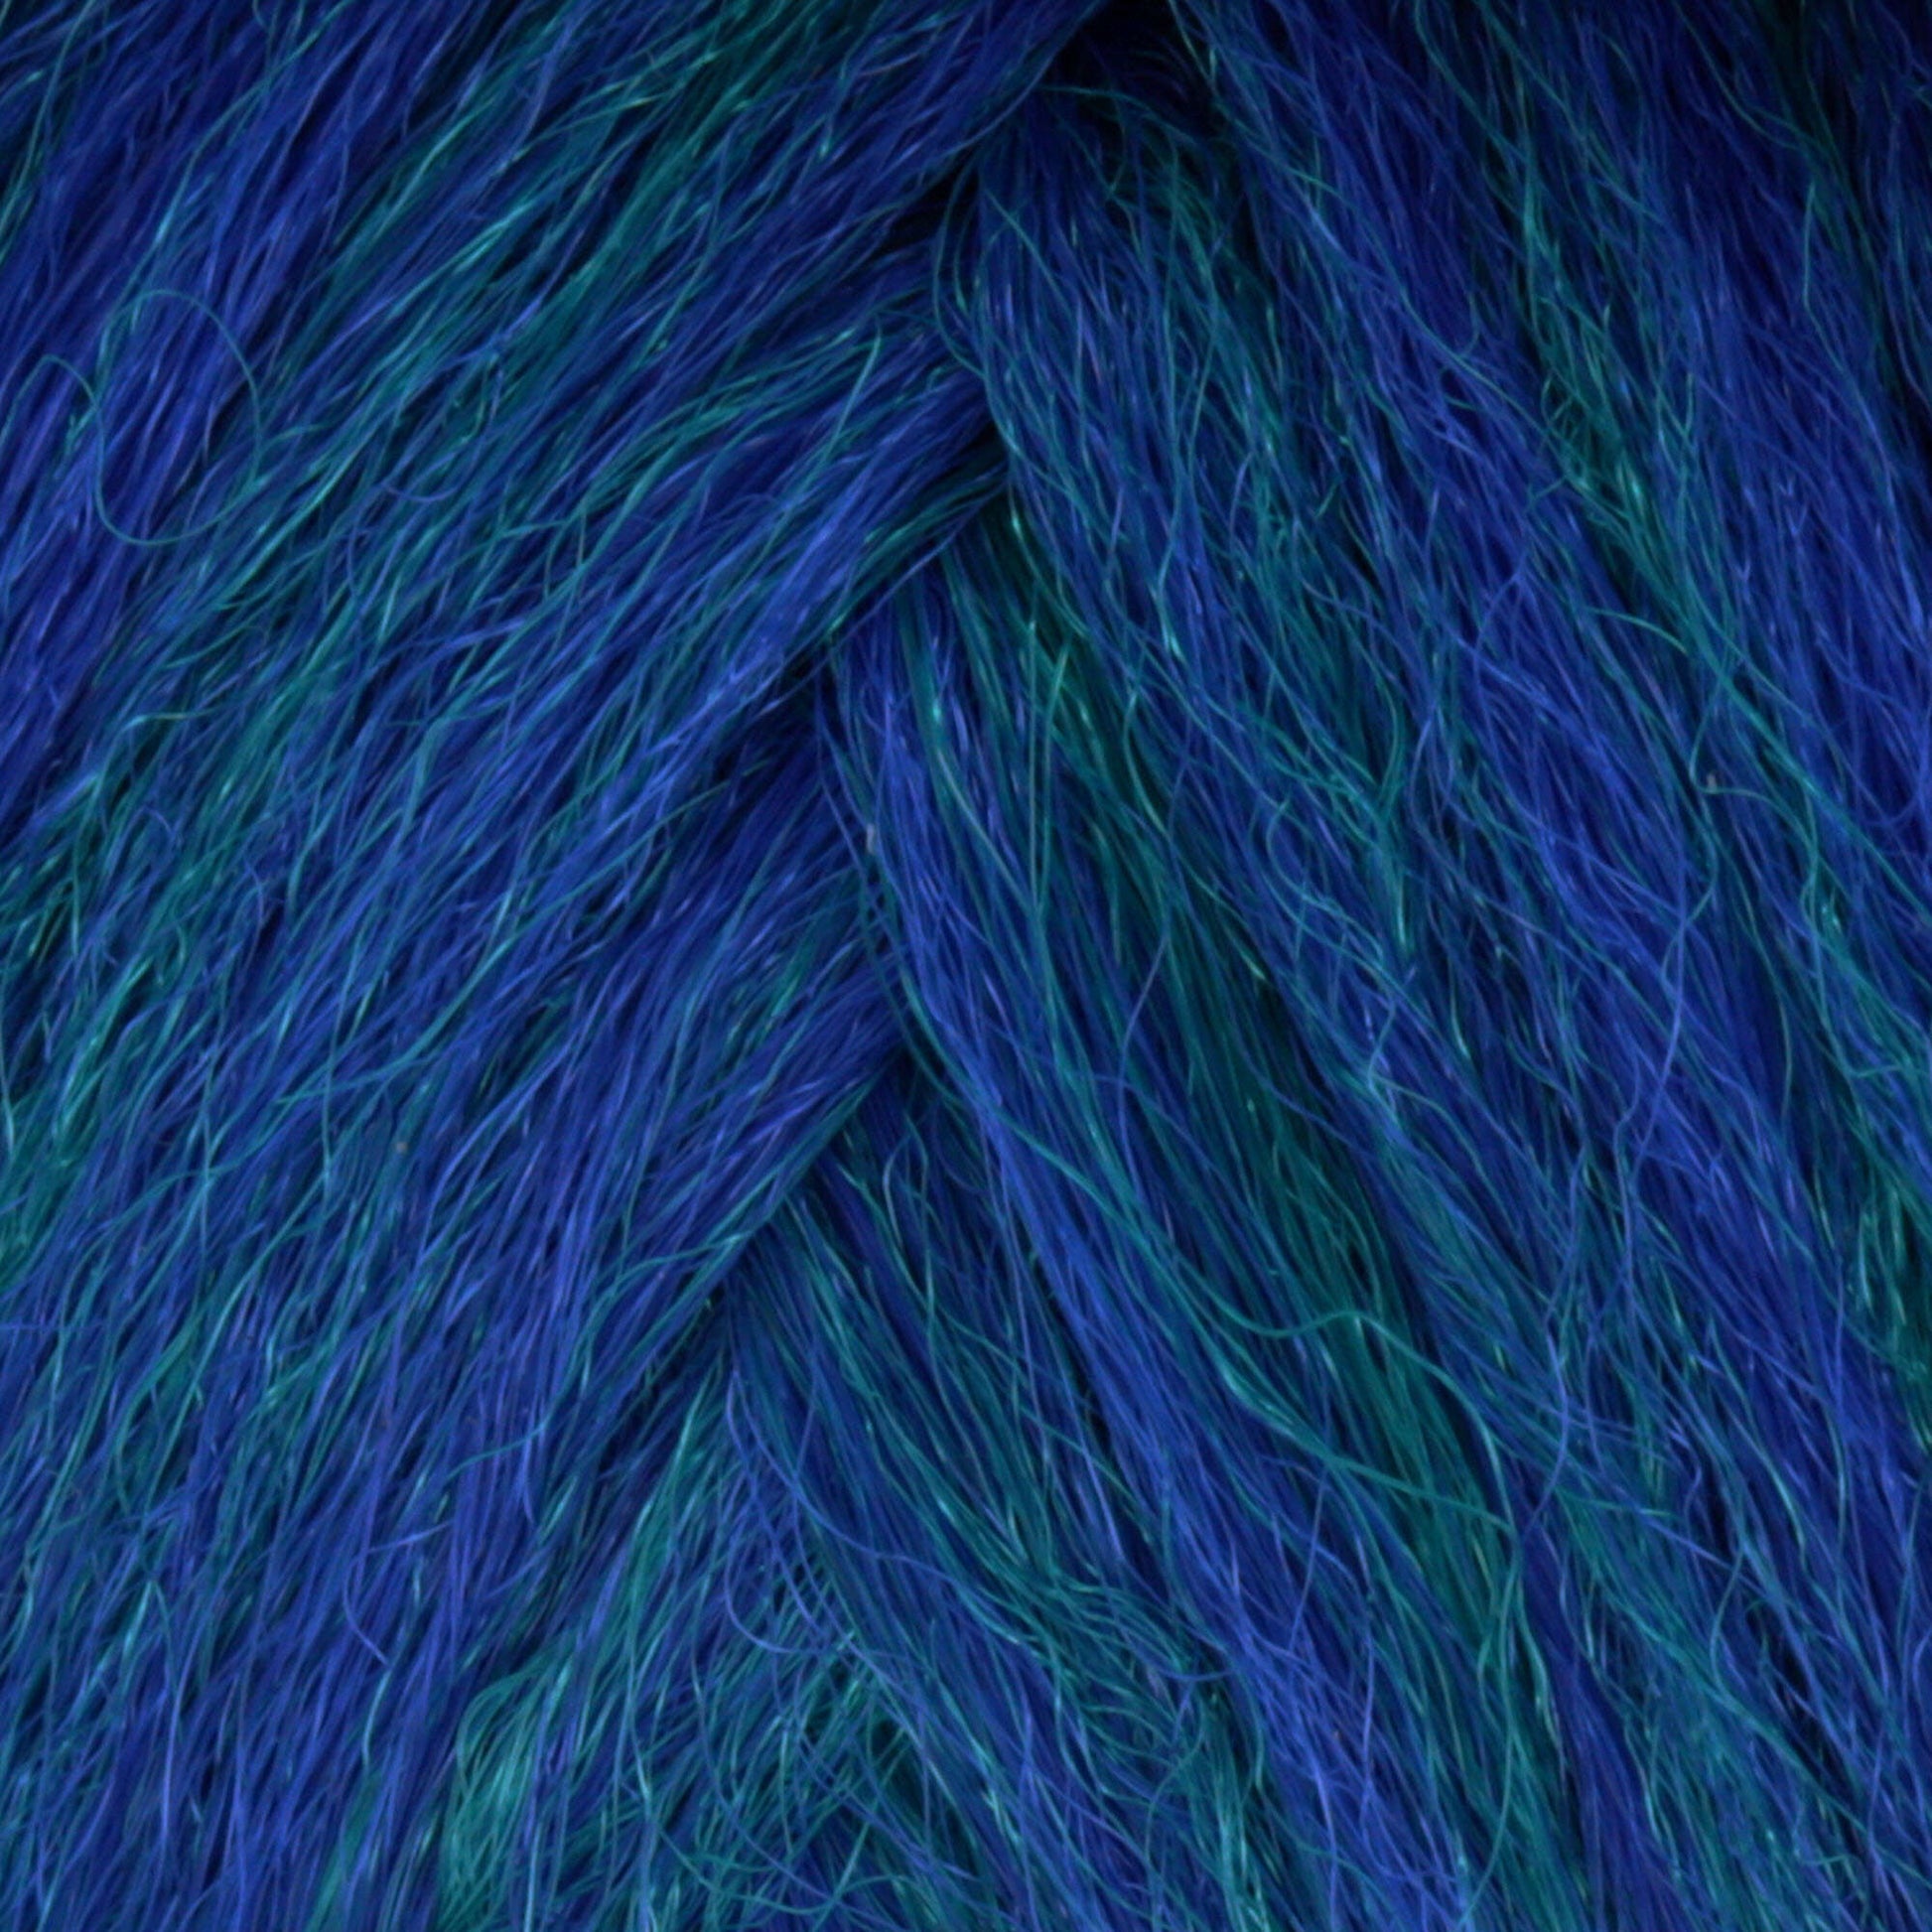 Phentex Slipper & Craft Yarn - Discontinued Shades Emerald Heather